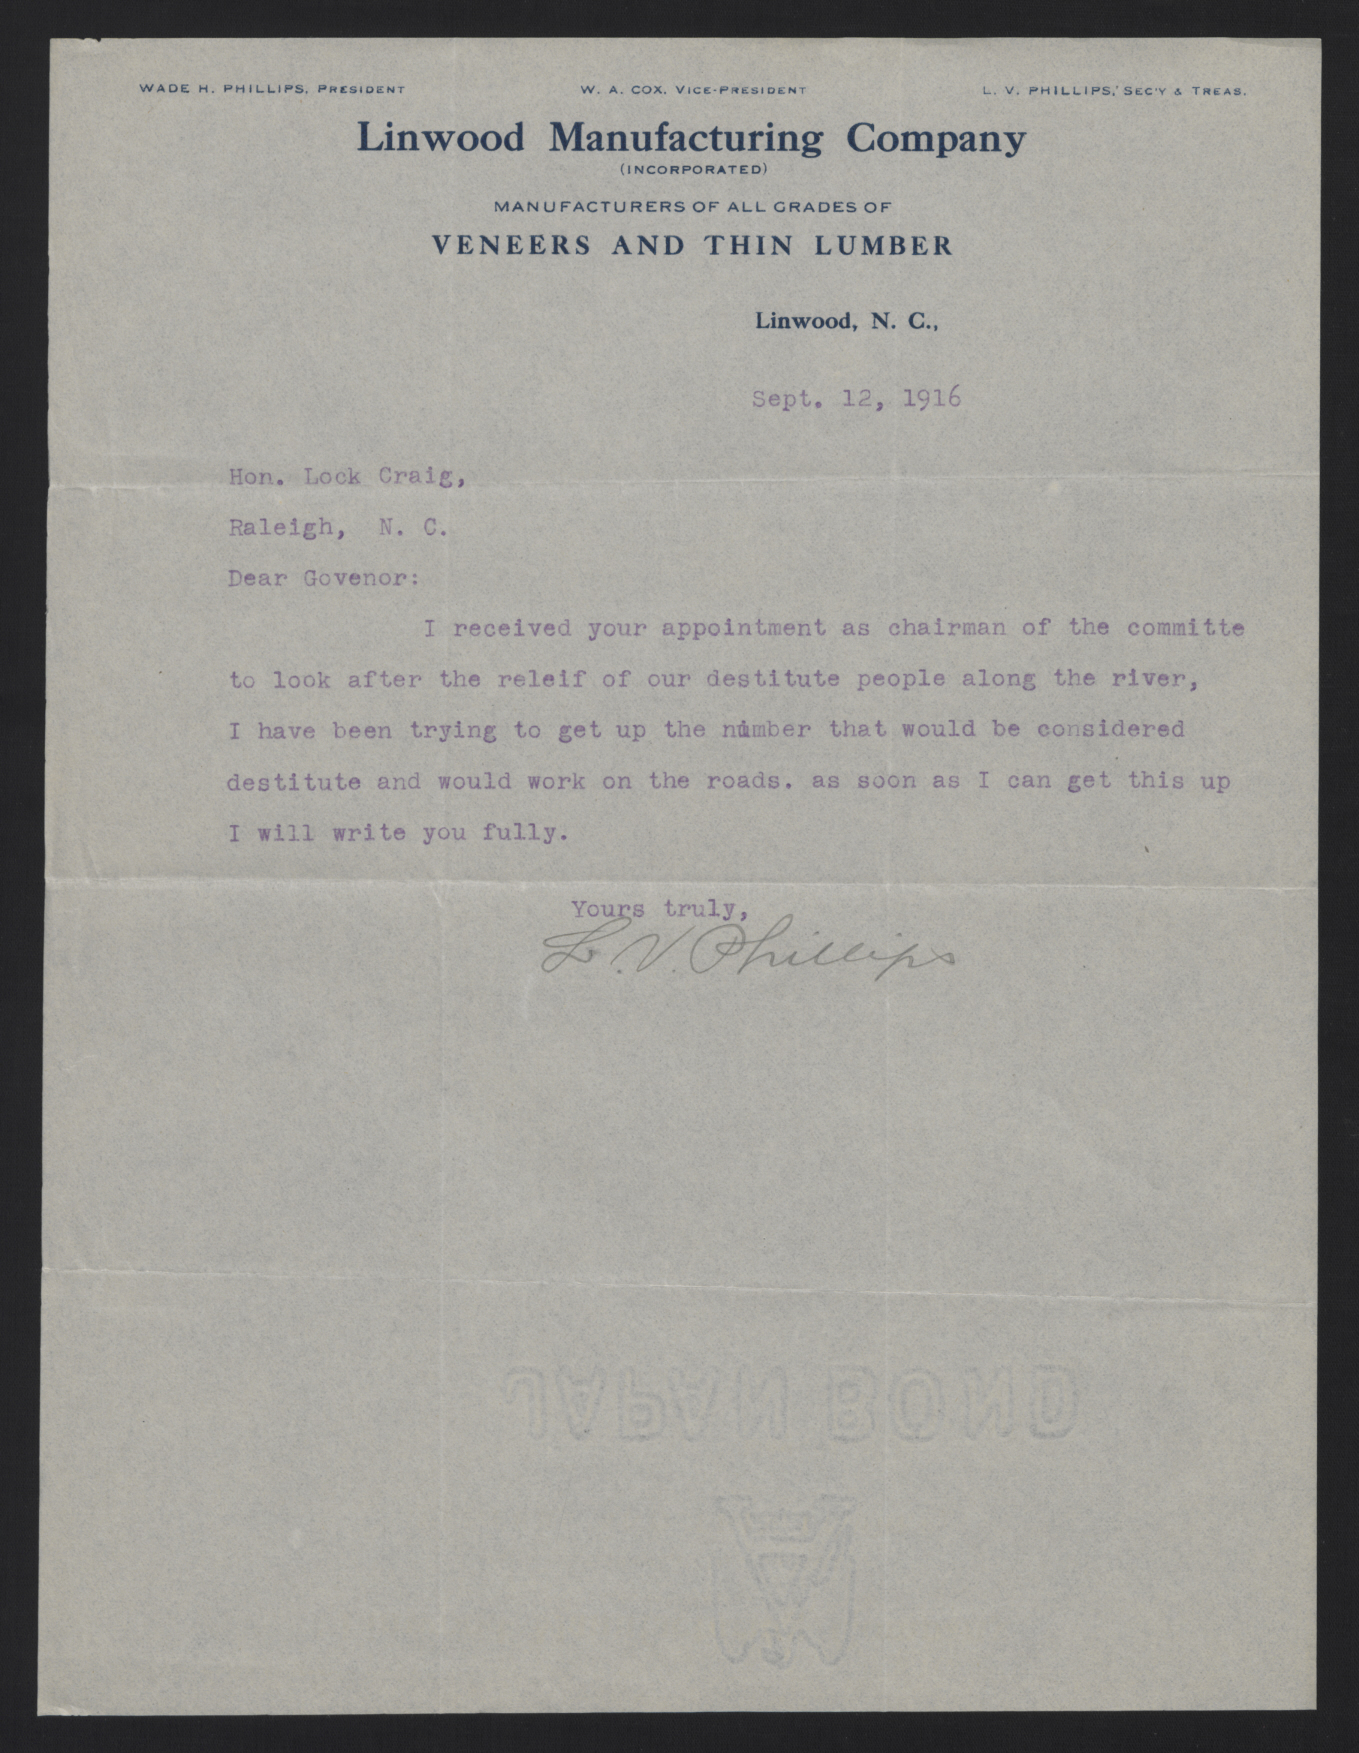 Letter from Phillips to Craig, September 12, 1916